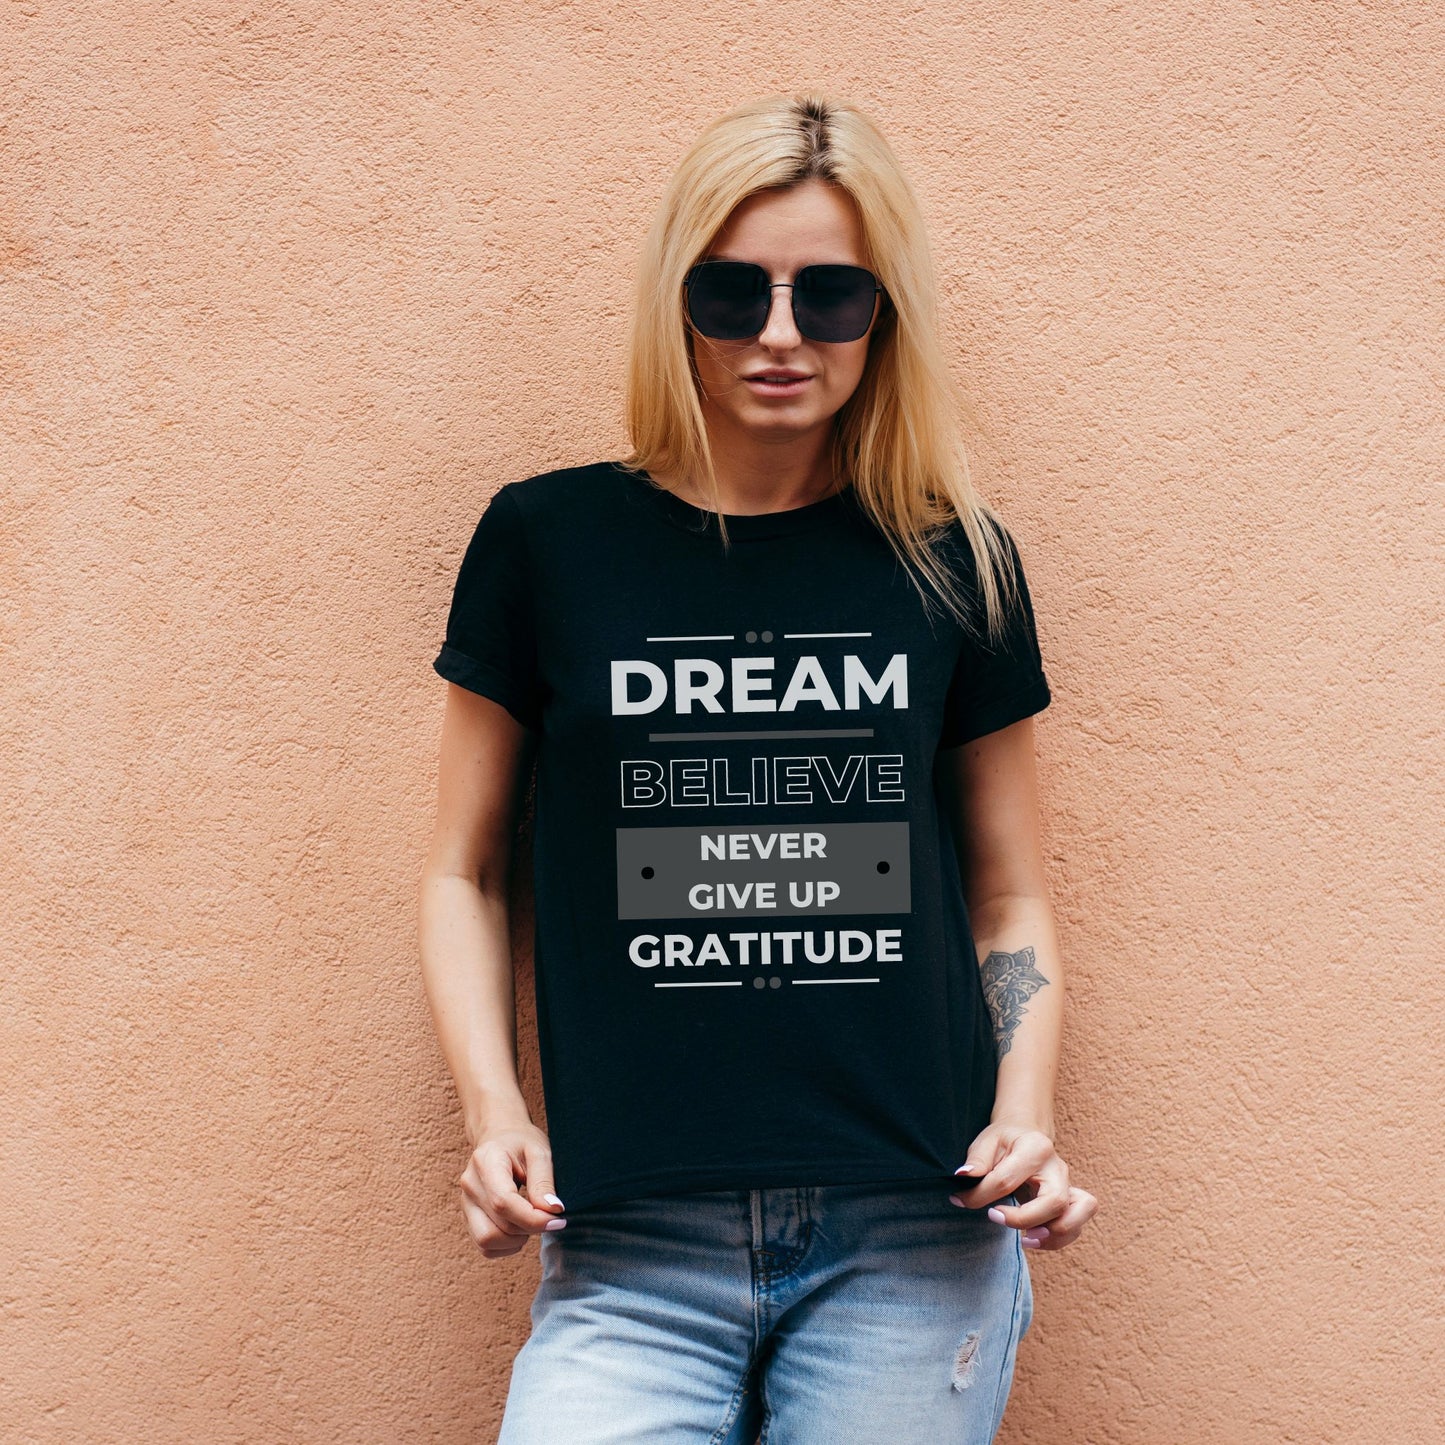 Dream Believe Never Give Up & Gratitude Tees - DBNG Lifestyle - Black Unisex T-shirt - Positivity - Inspiring Motivation - Keys of Success